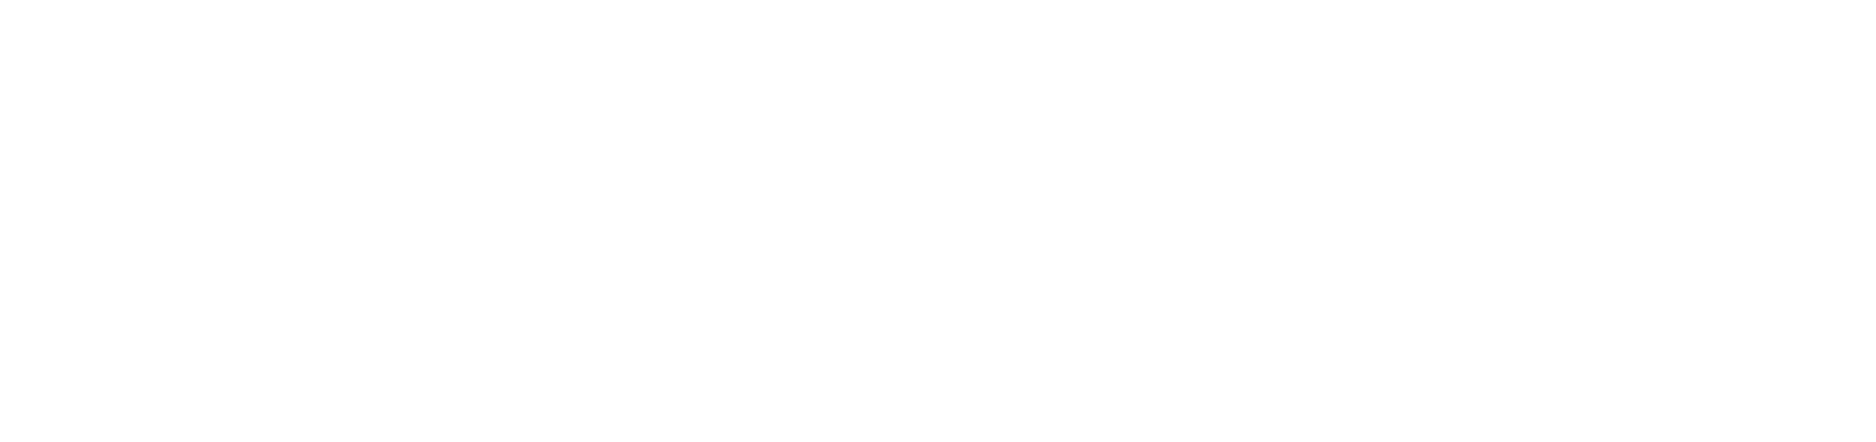 endless stories by sunbrella